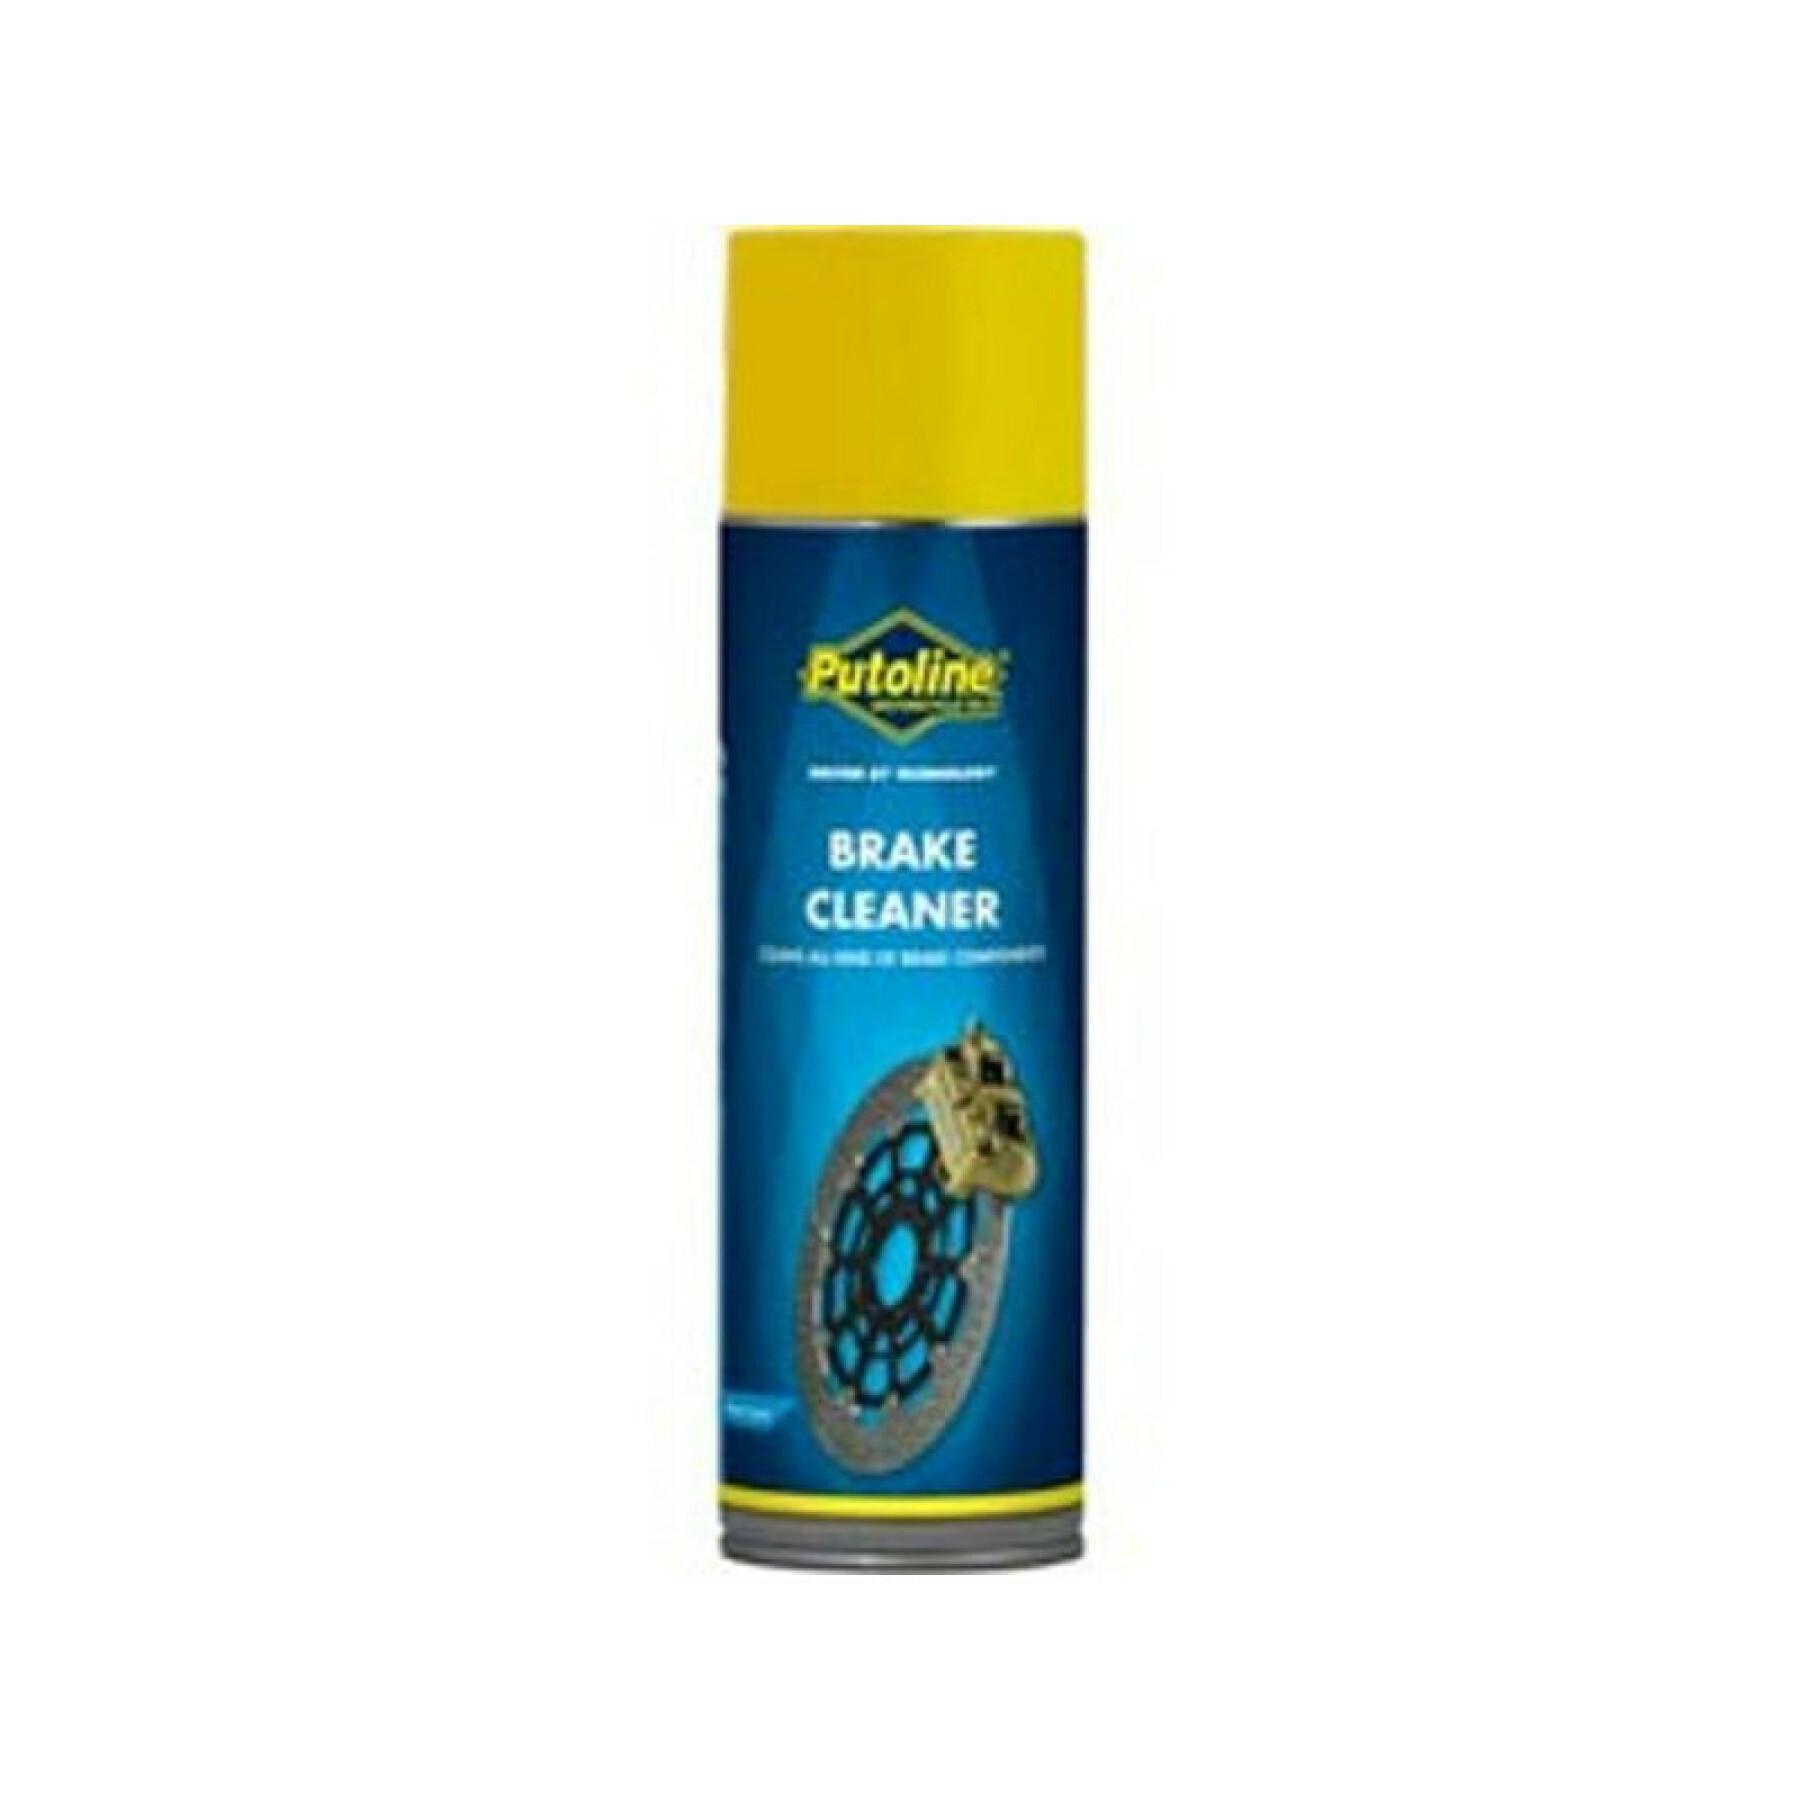 Motorcycle brake cleaner spray Putoline